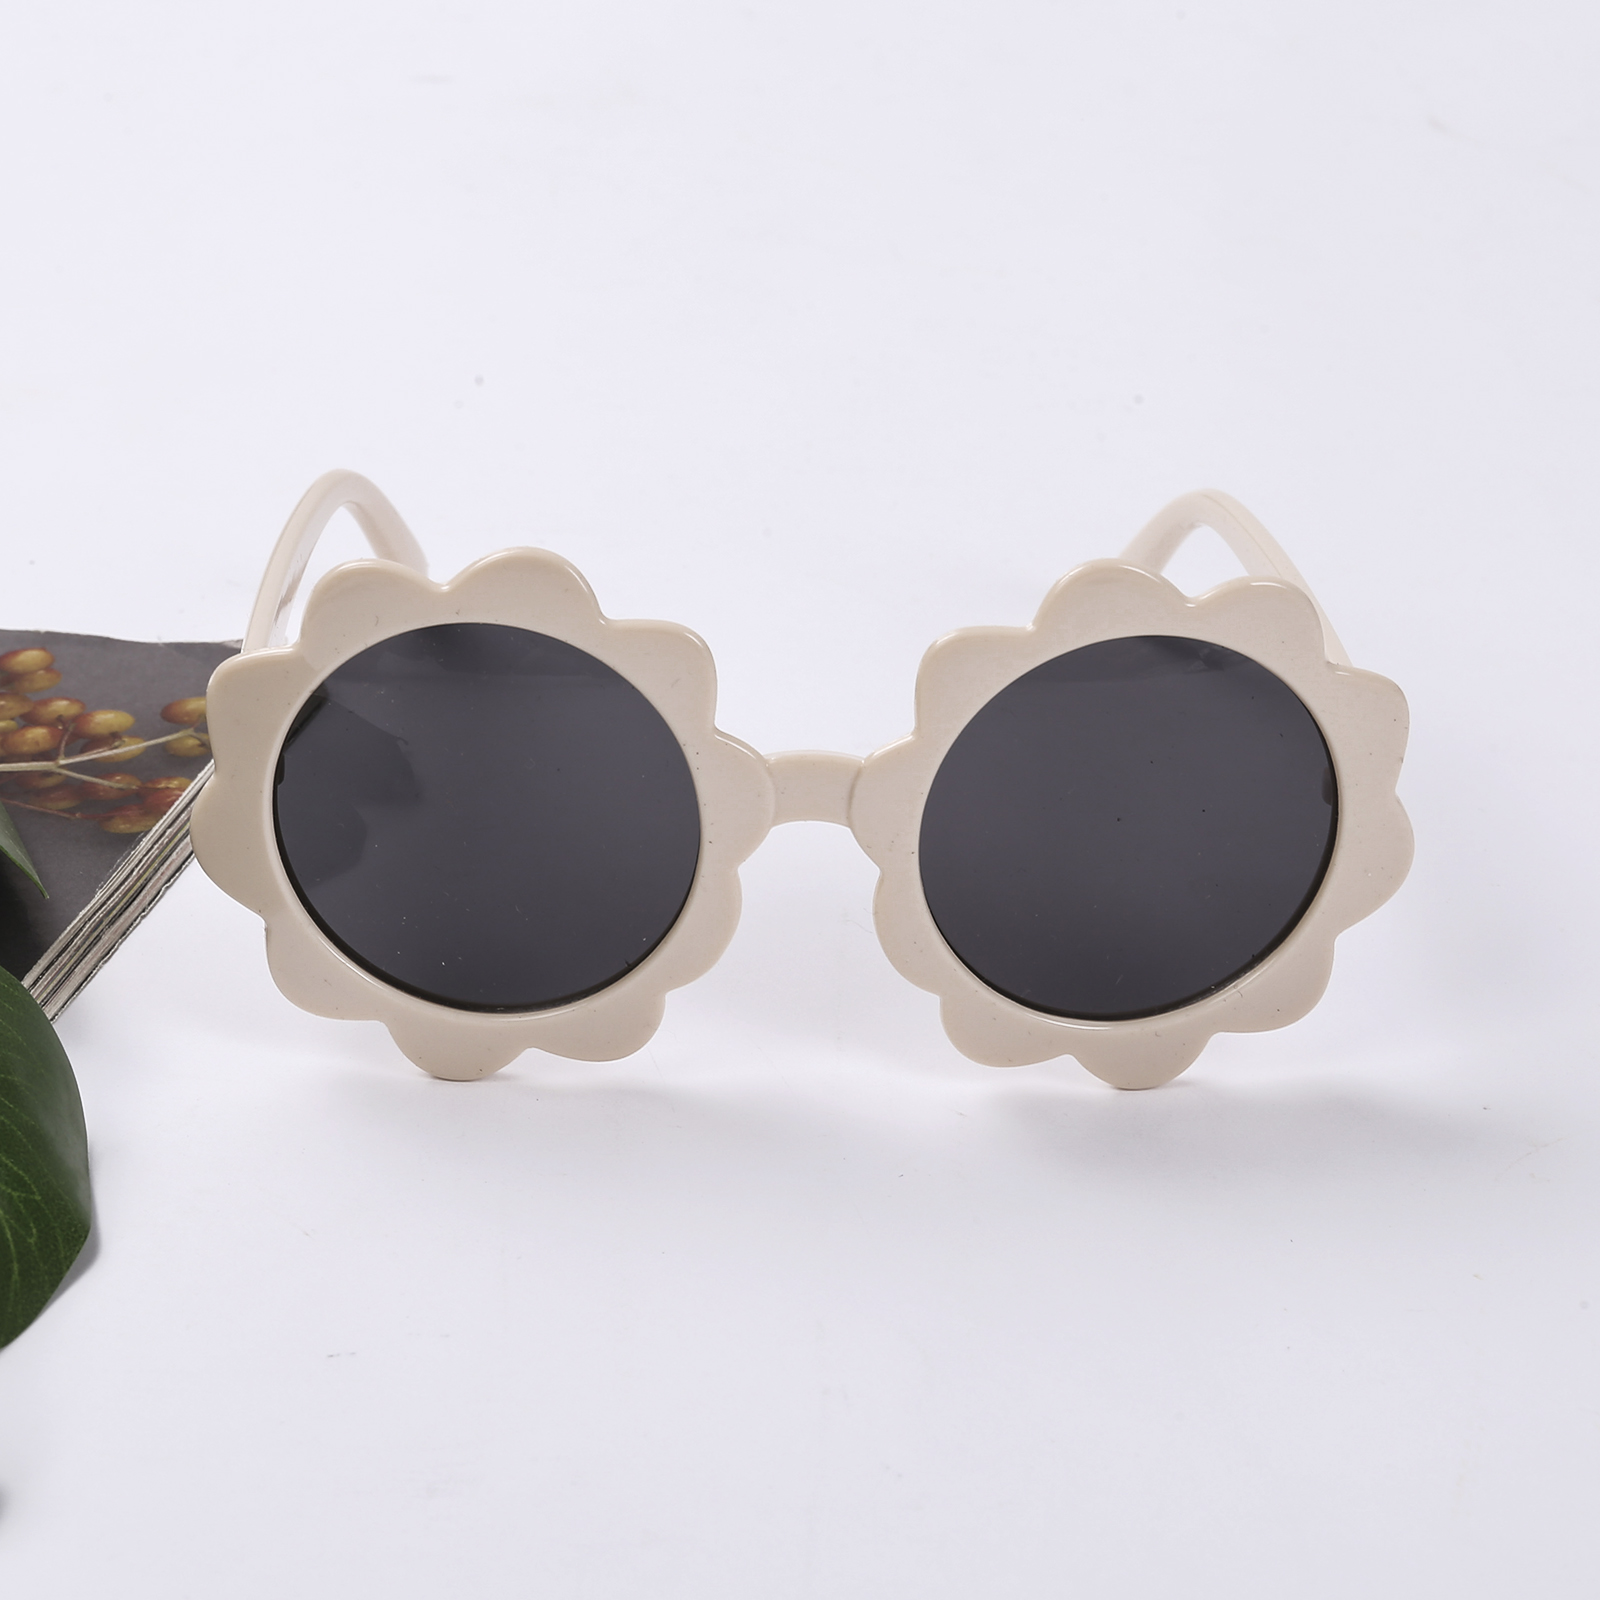 Binpure Kids Beach Sunglasses, Round Flower Shape UV400 Protection Sunglasses - image 3 of 7